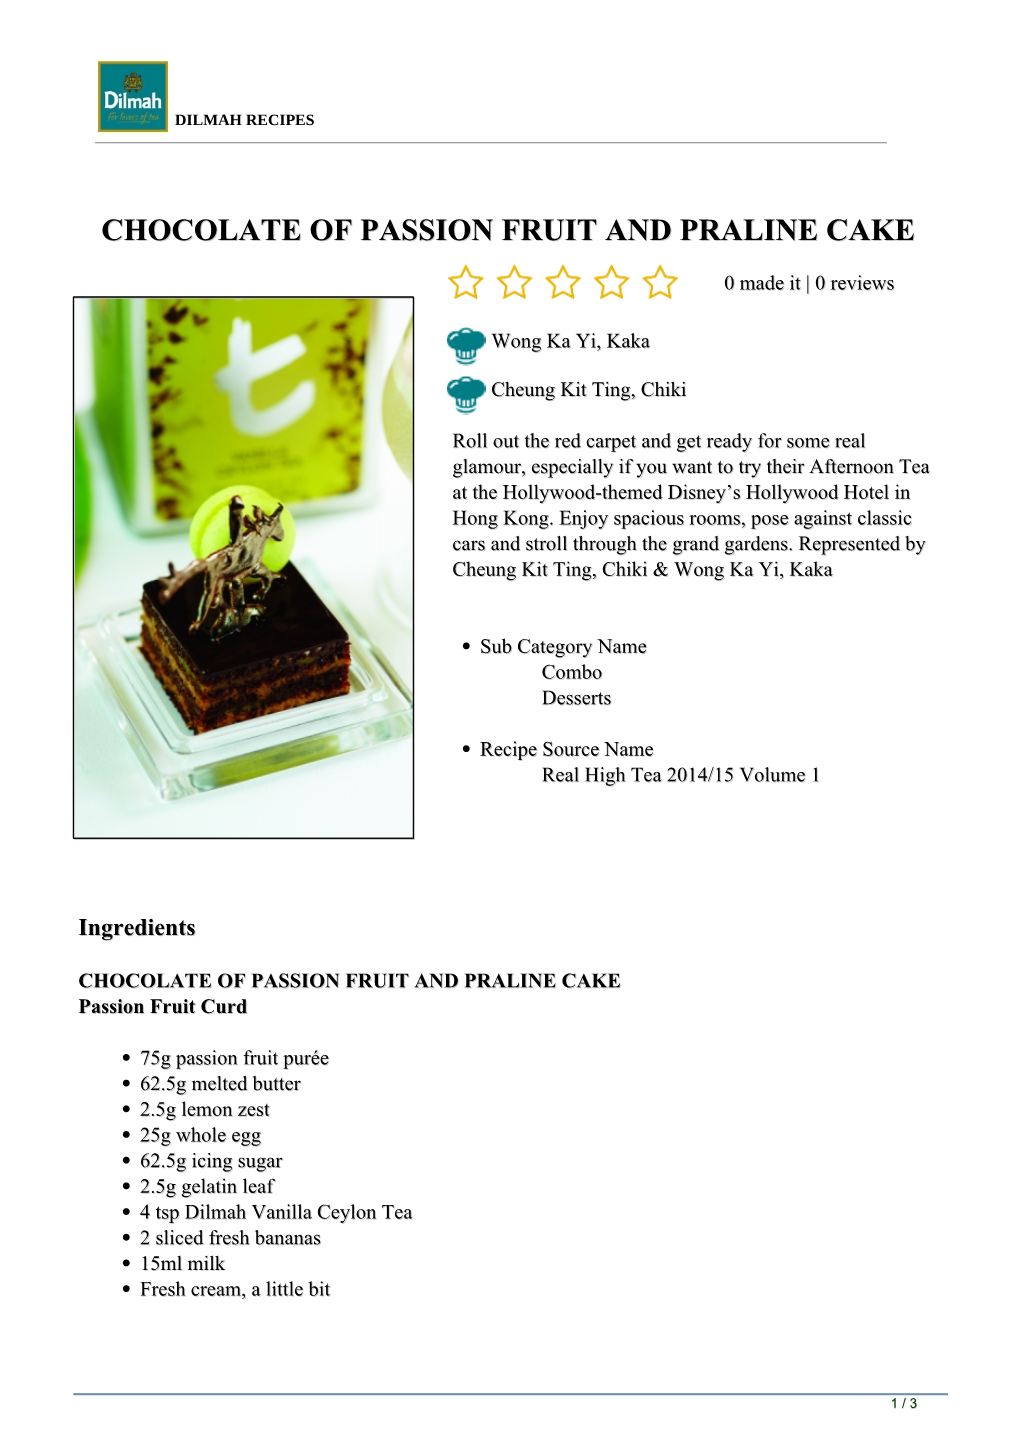 Chocolate of Passion Fruit and Praline Cake